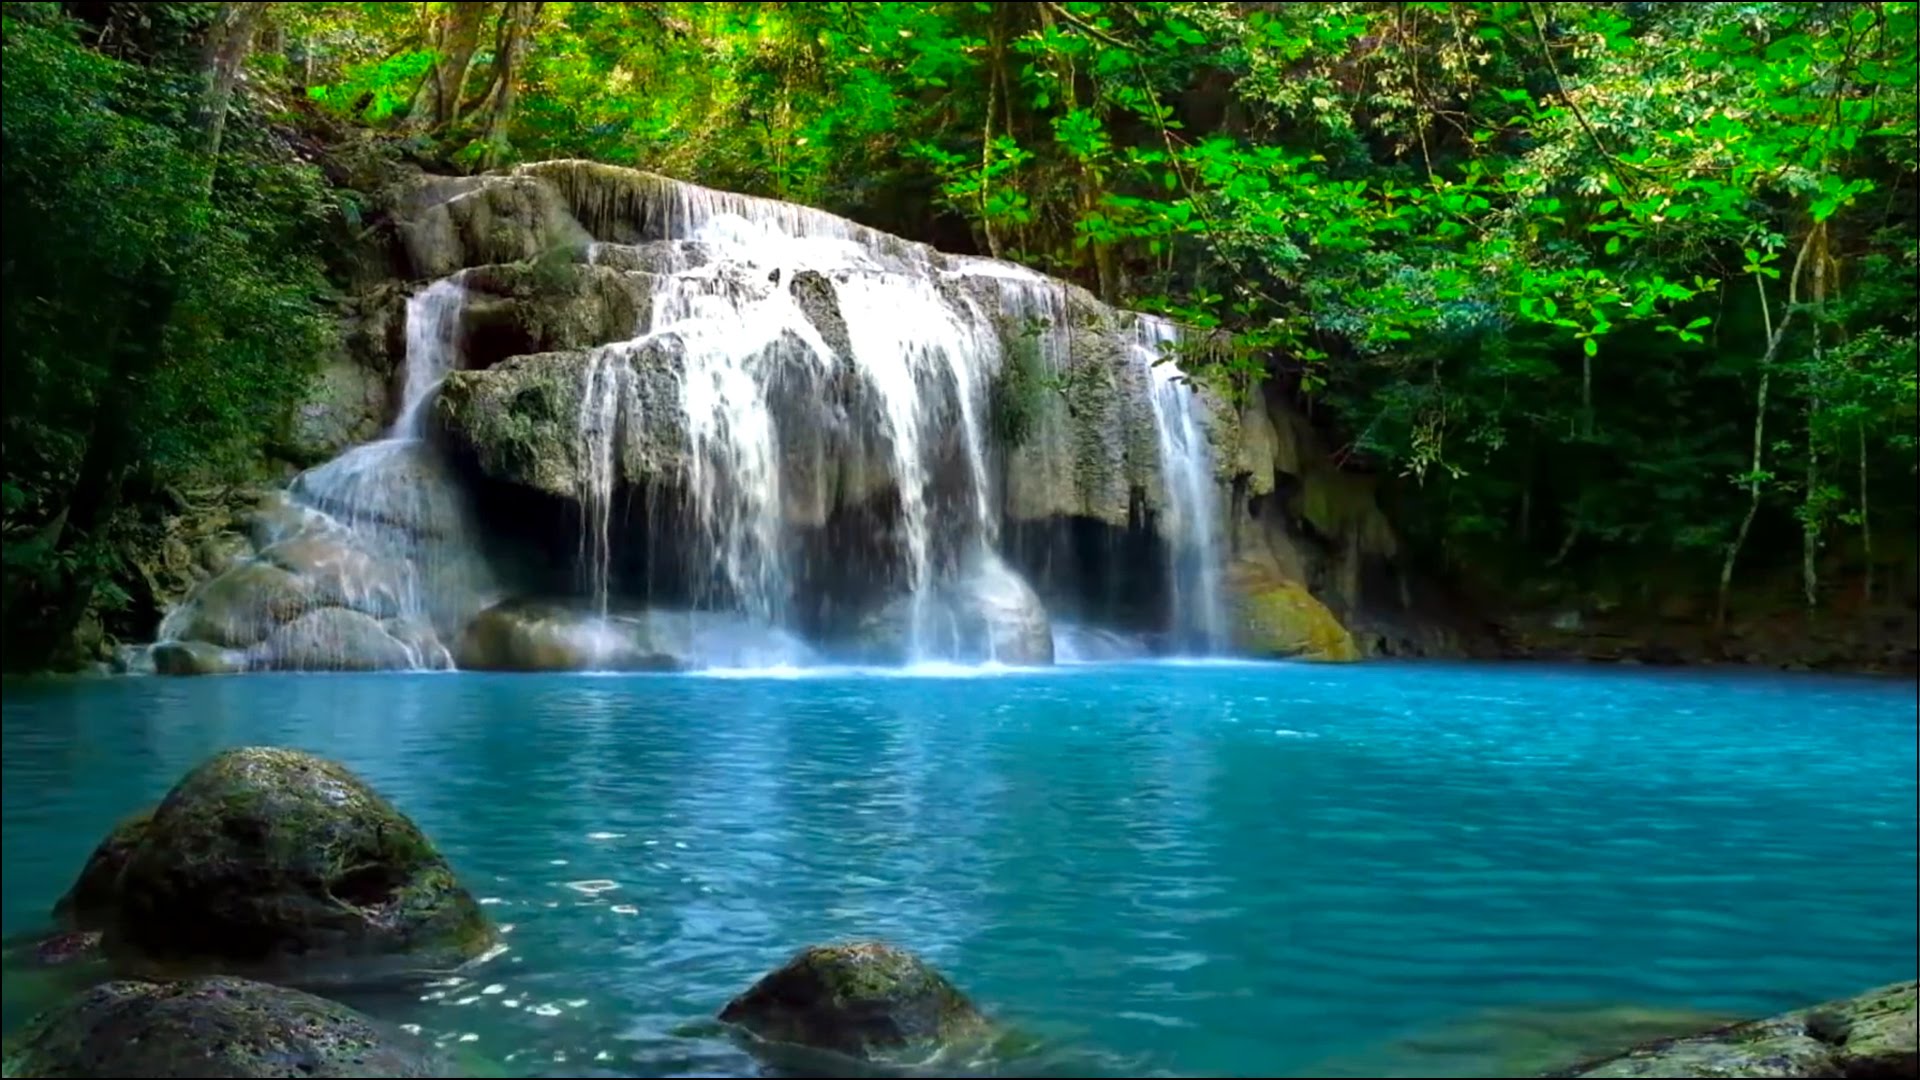 Waterfall & Jungle Sounds - Relaxing Tropical Rainforest Nature ...